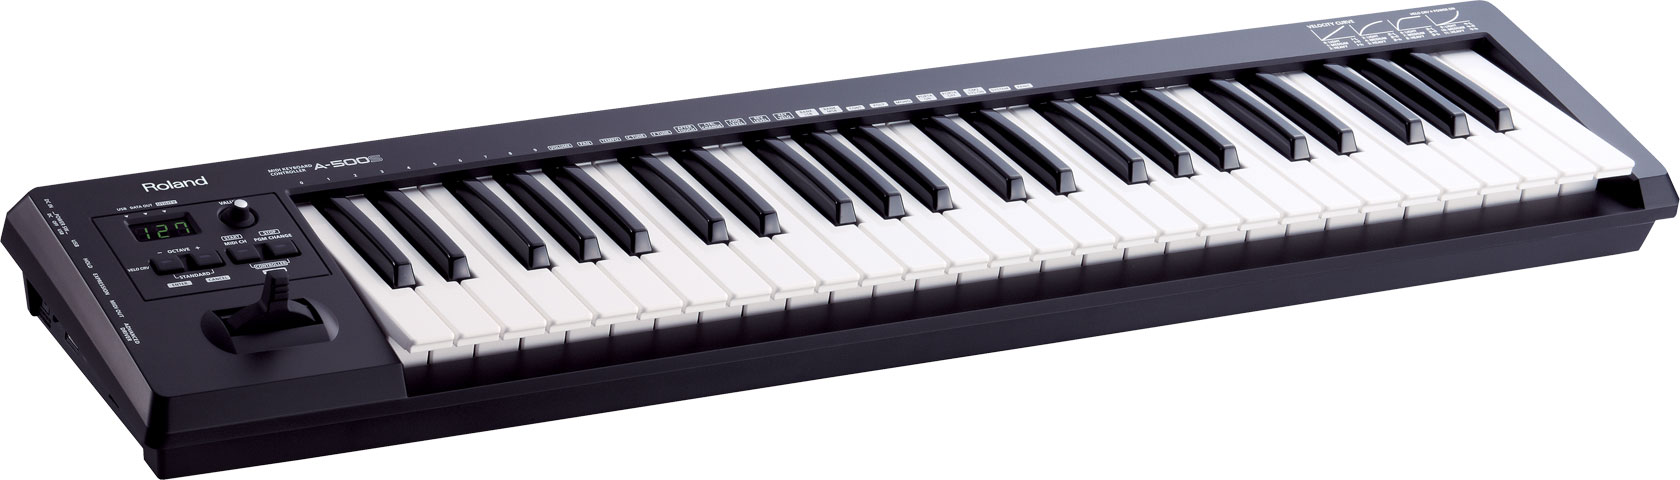 Roland A-500S MIDI Keyboard Controller